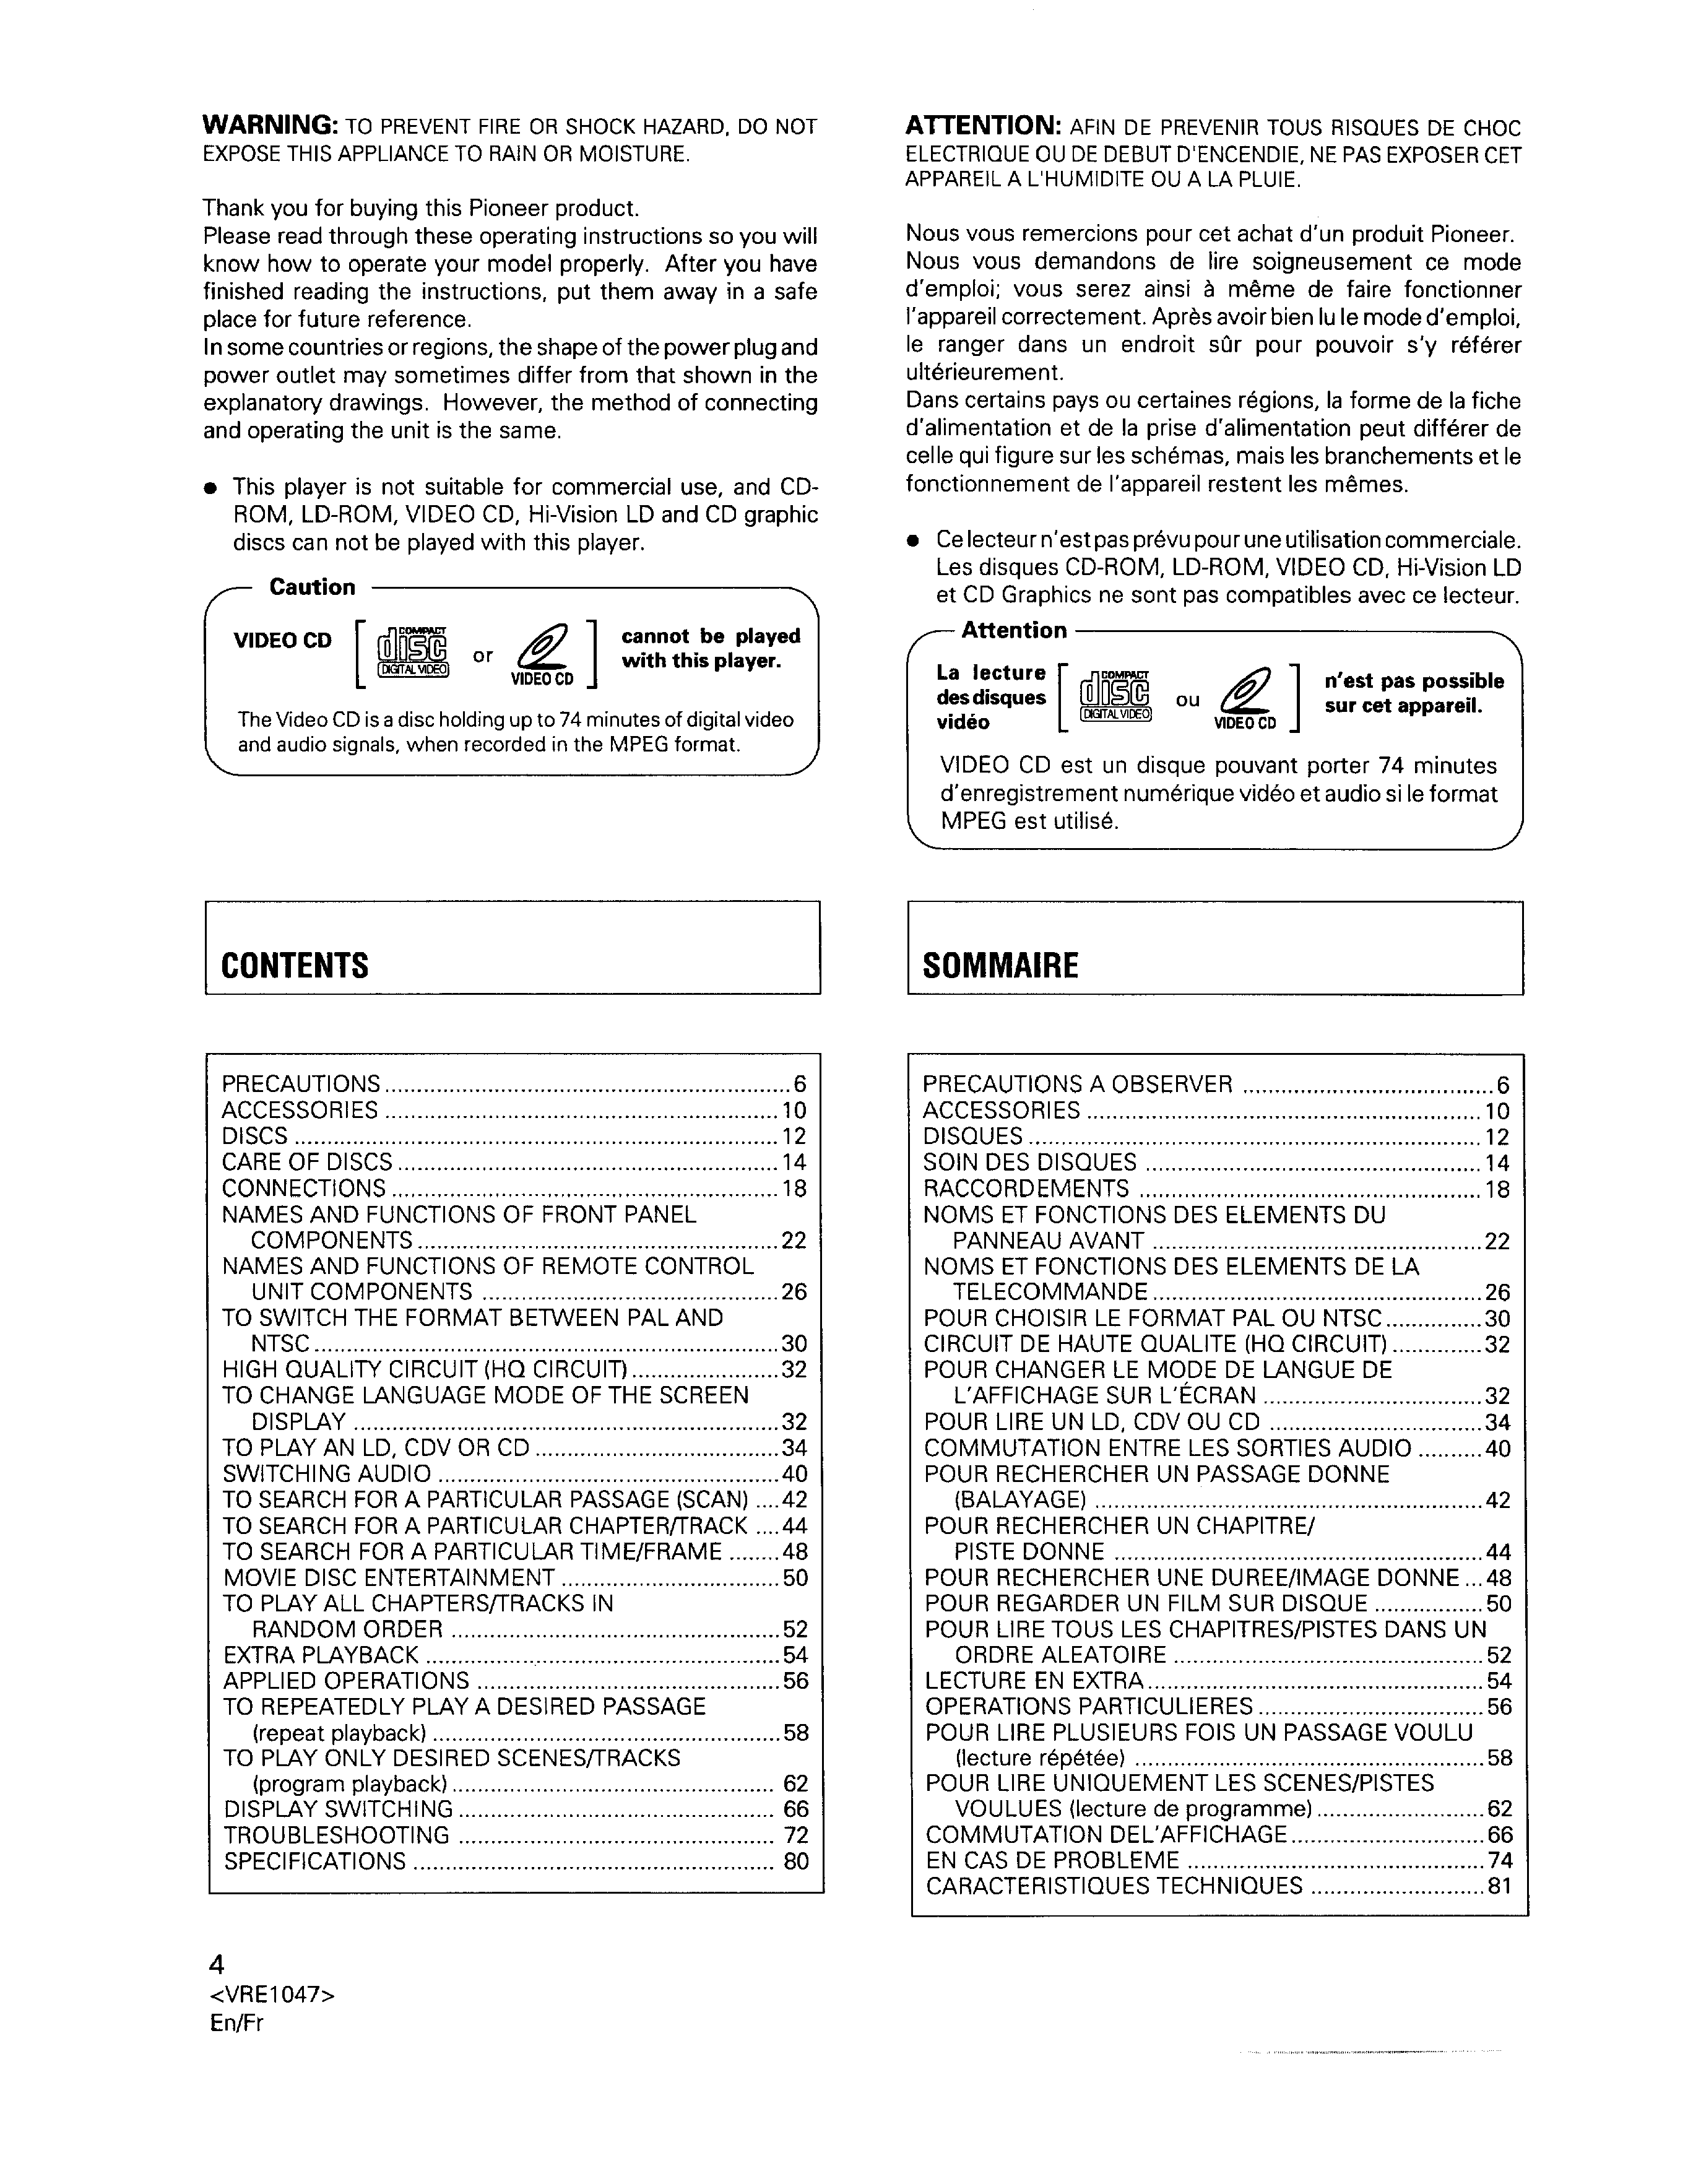 Service Manual-Anleitung für Pioneer CLD-D925 